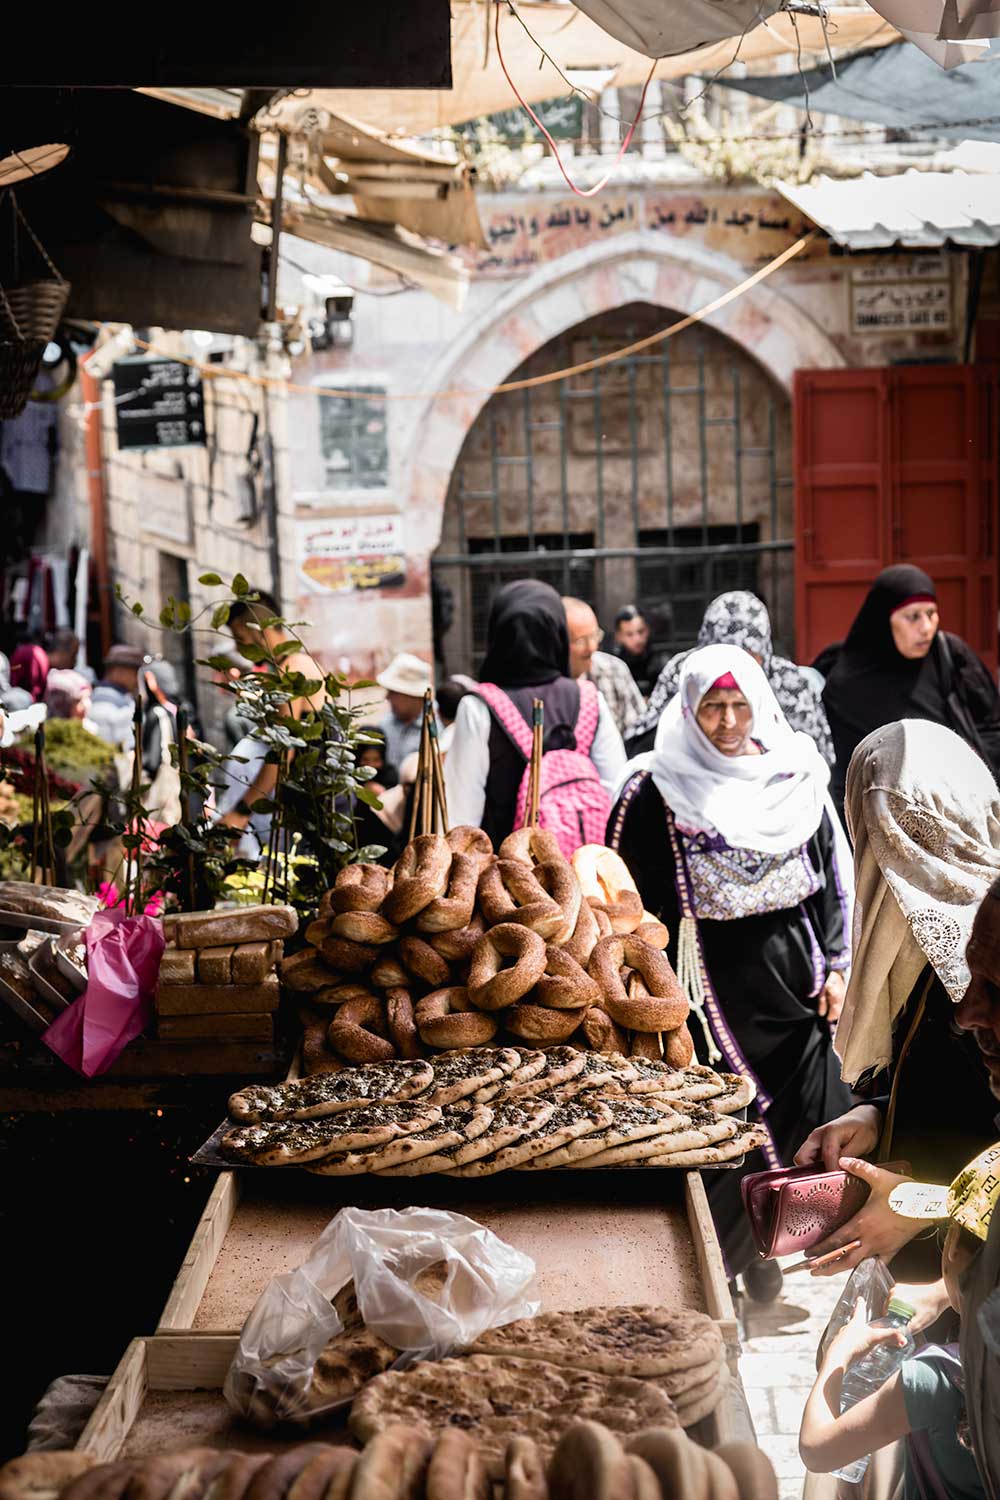 Market scenes in the Arab Quarter during our 2 days in Jerusalem